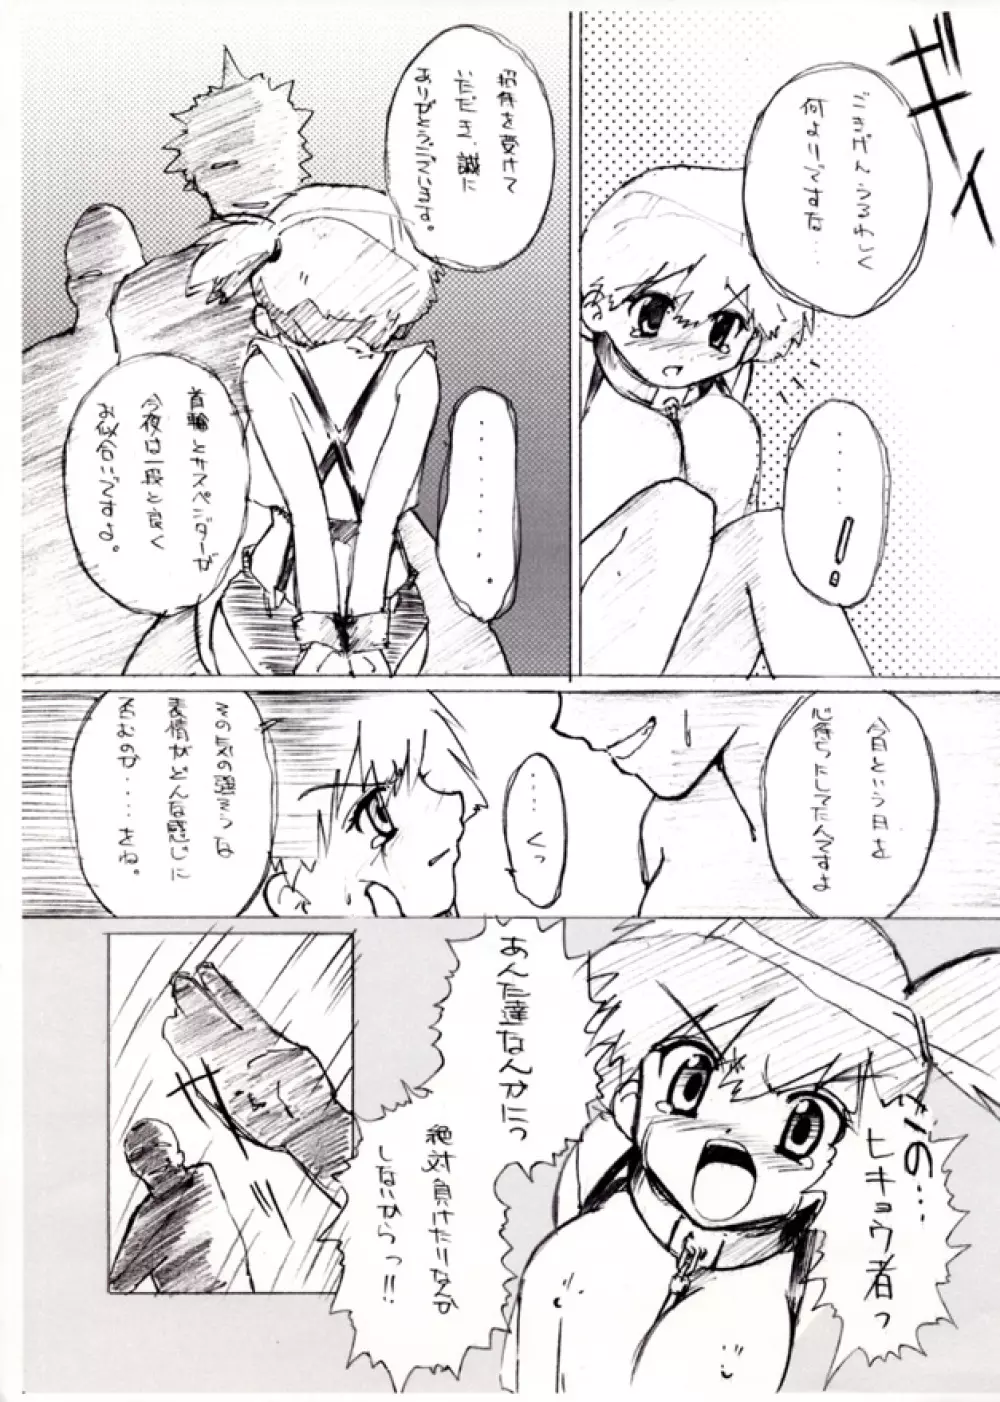 KASUMIX XPLOSION Kasumi Comic part5 - page13